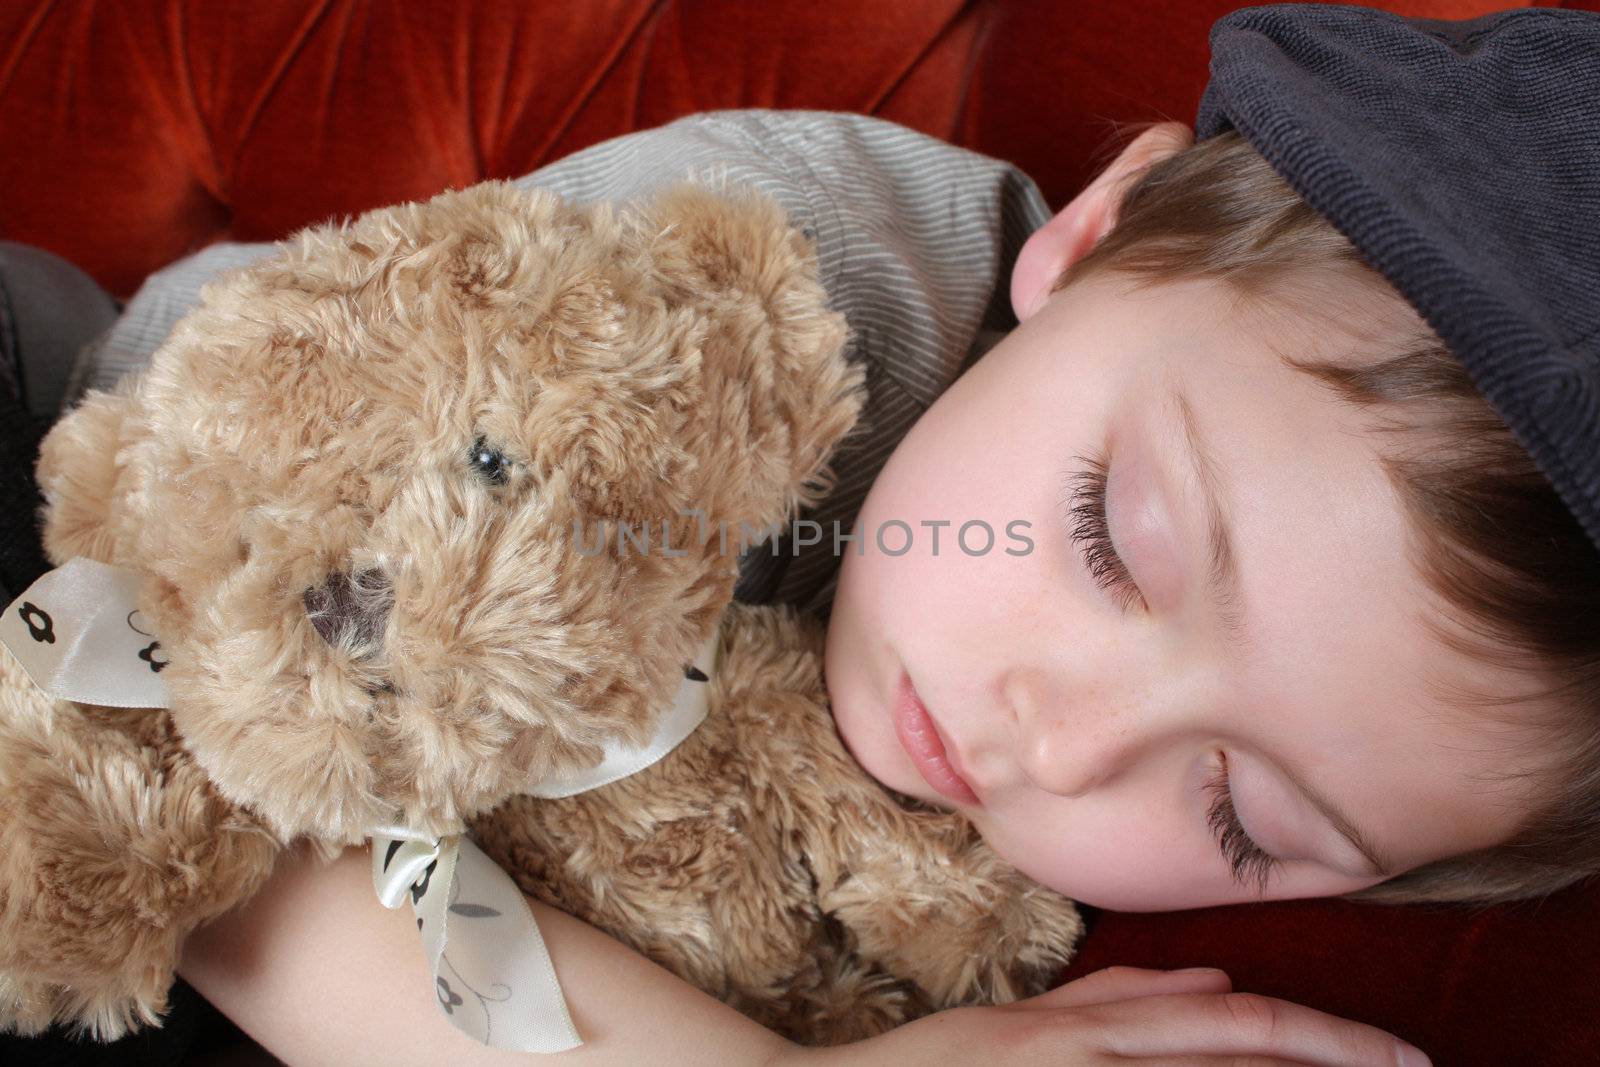 Young boy wearing a hat, sleeping holding a teddy bear